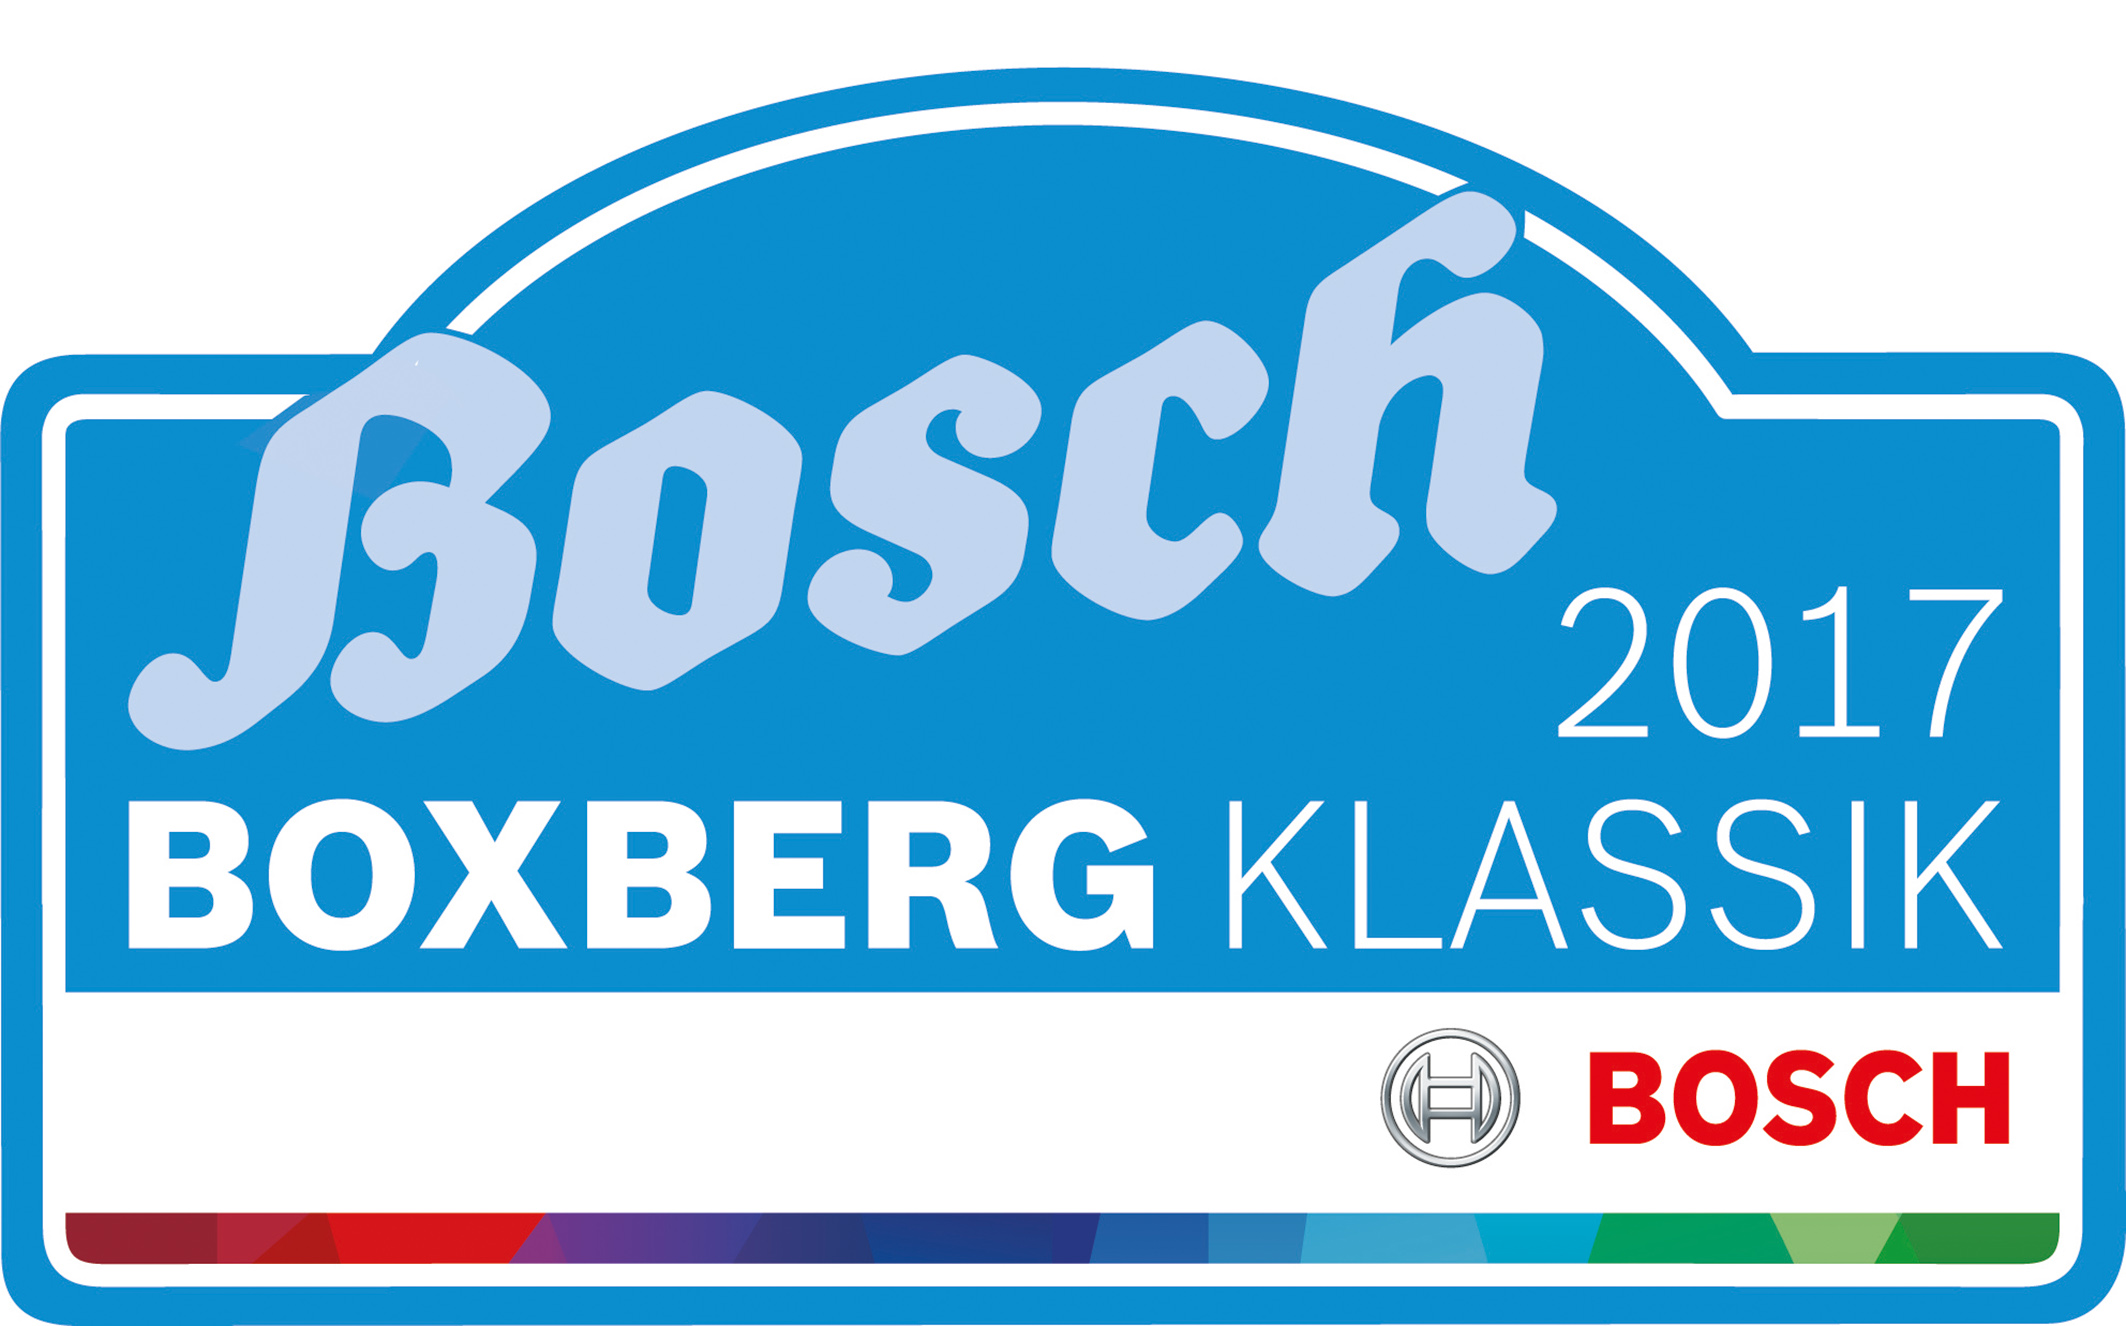 Die Bosch Boxberg Klassik Rallye startet 2017 bereits zum 18. Mal